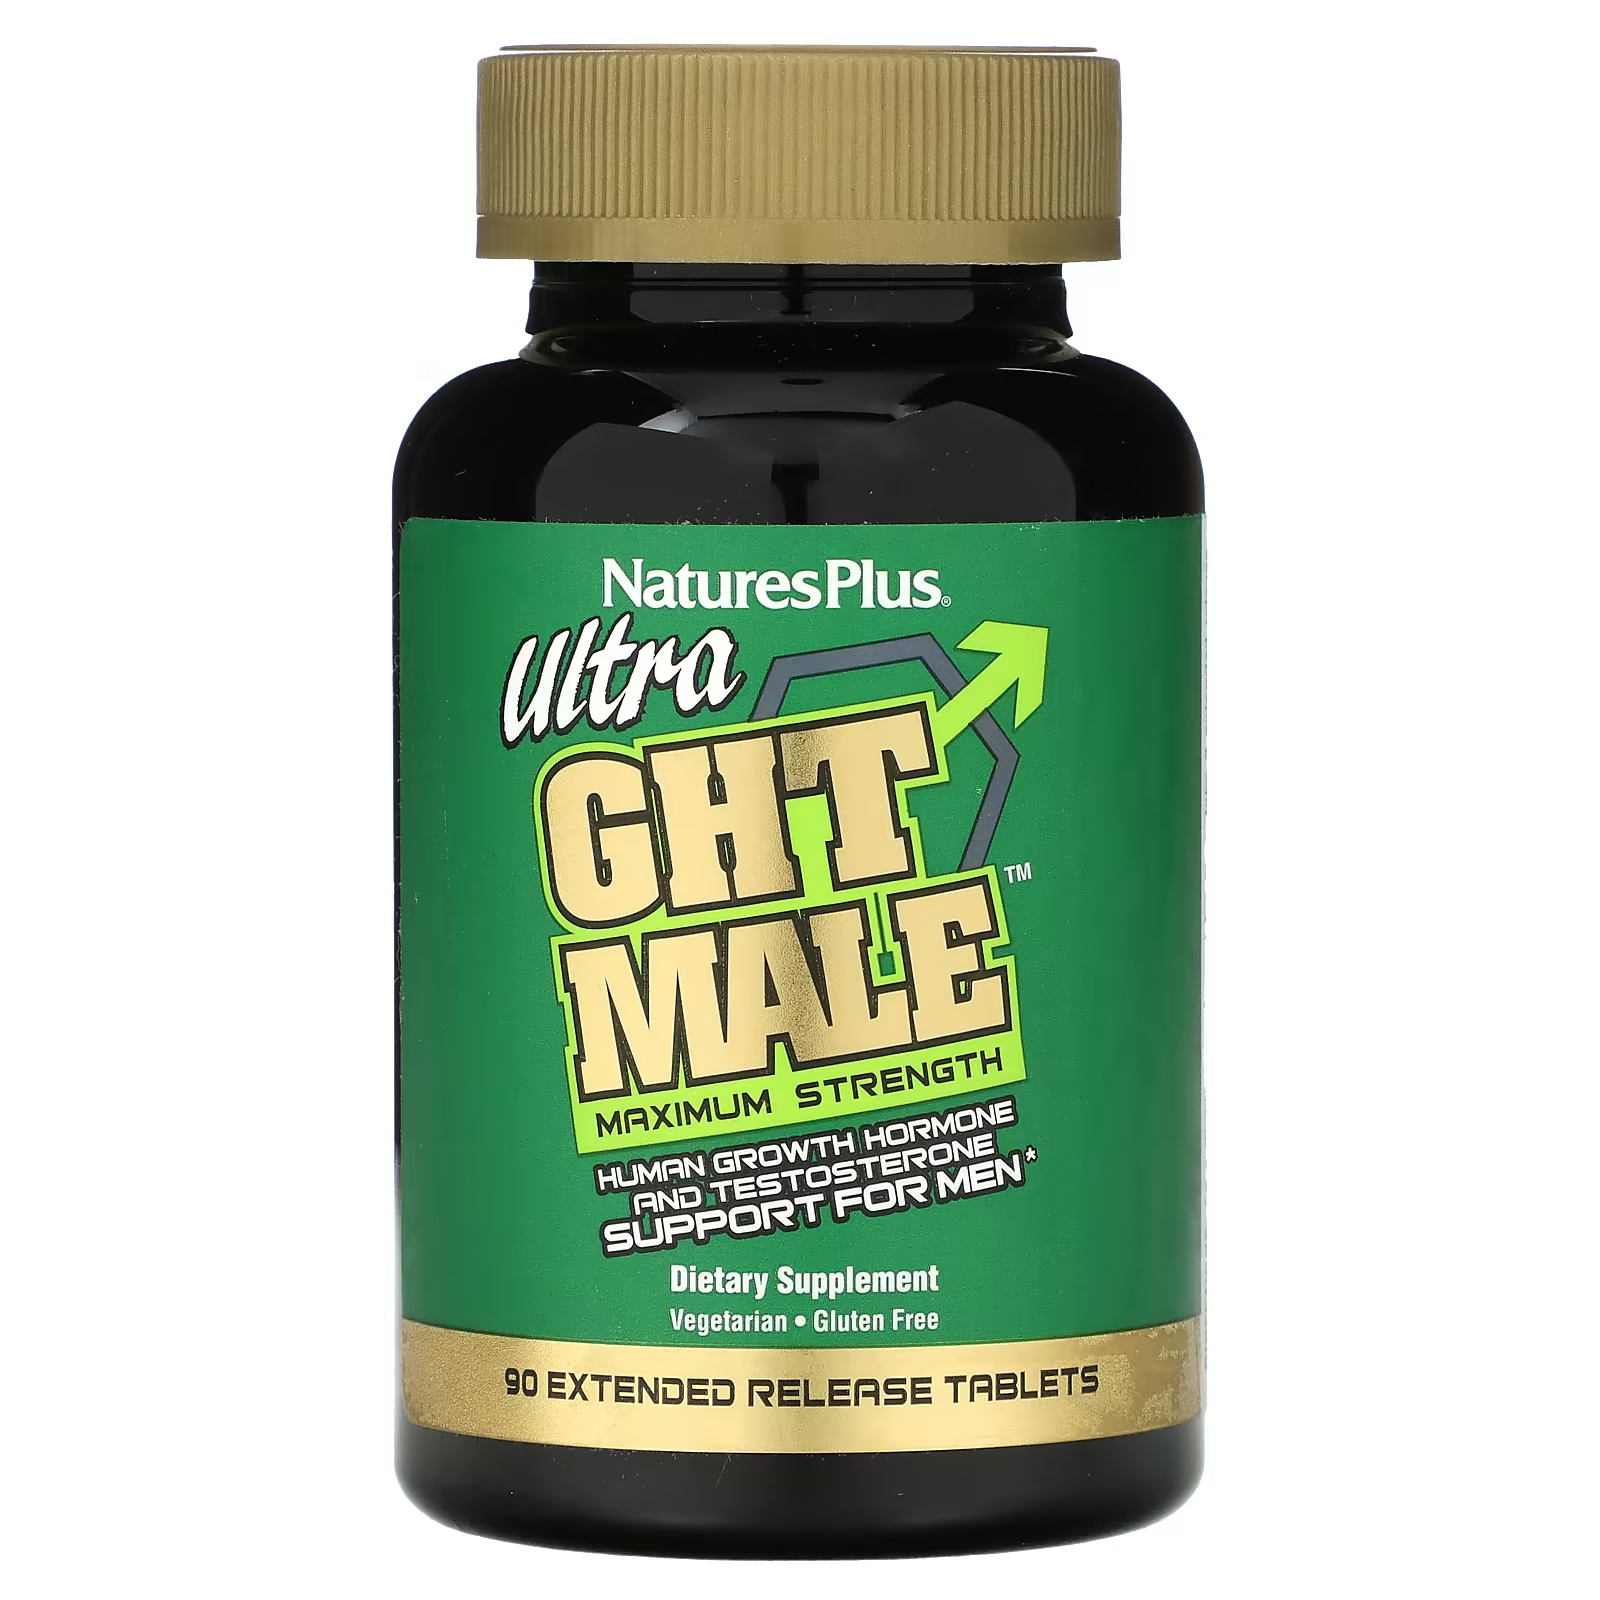 Пищевая добавка NaturesPlus Ultra GHT Male для мужчин, 90 таблеток naturesplus ultra t male повышение тестостерона для мужчин максимальная сила 60 таблеток